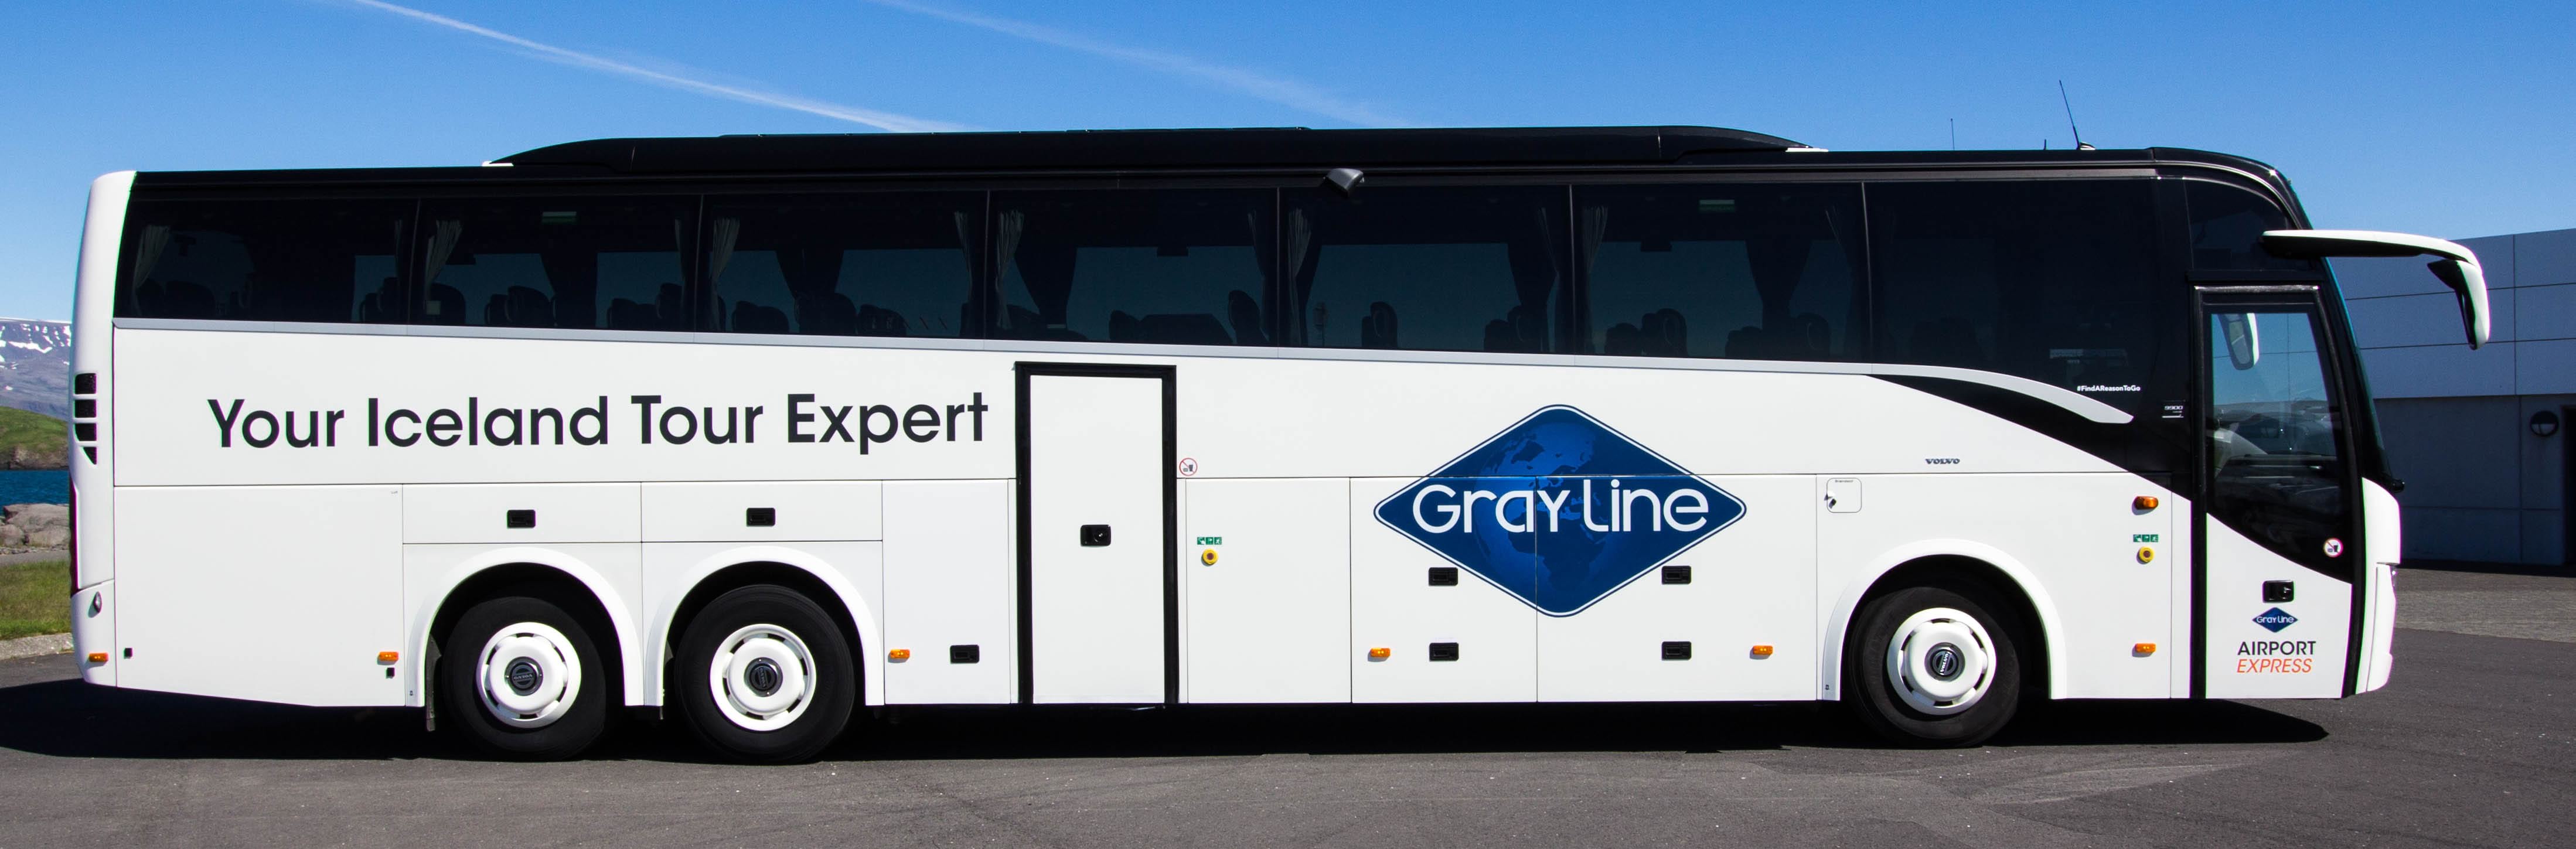 grayline bus tour iceland